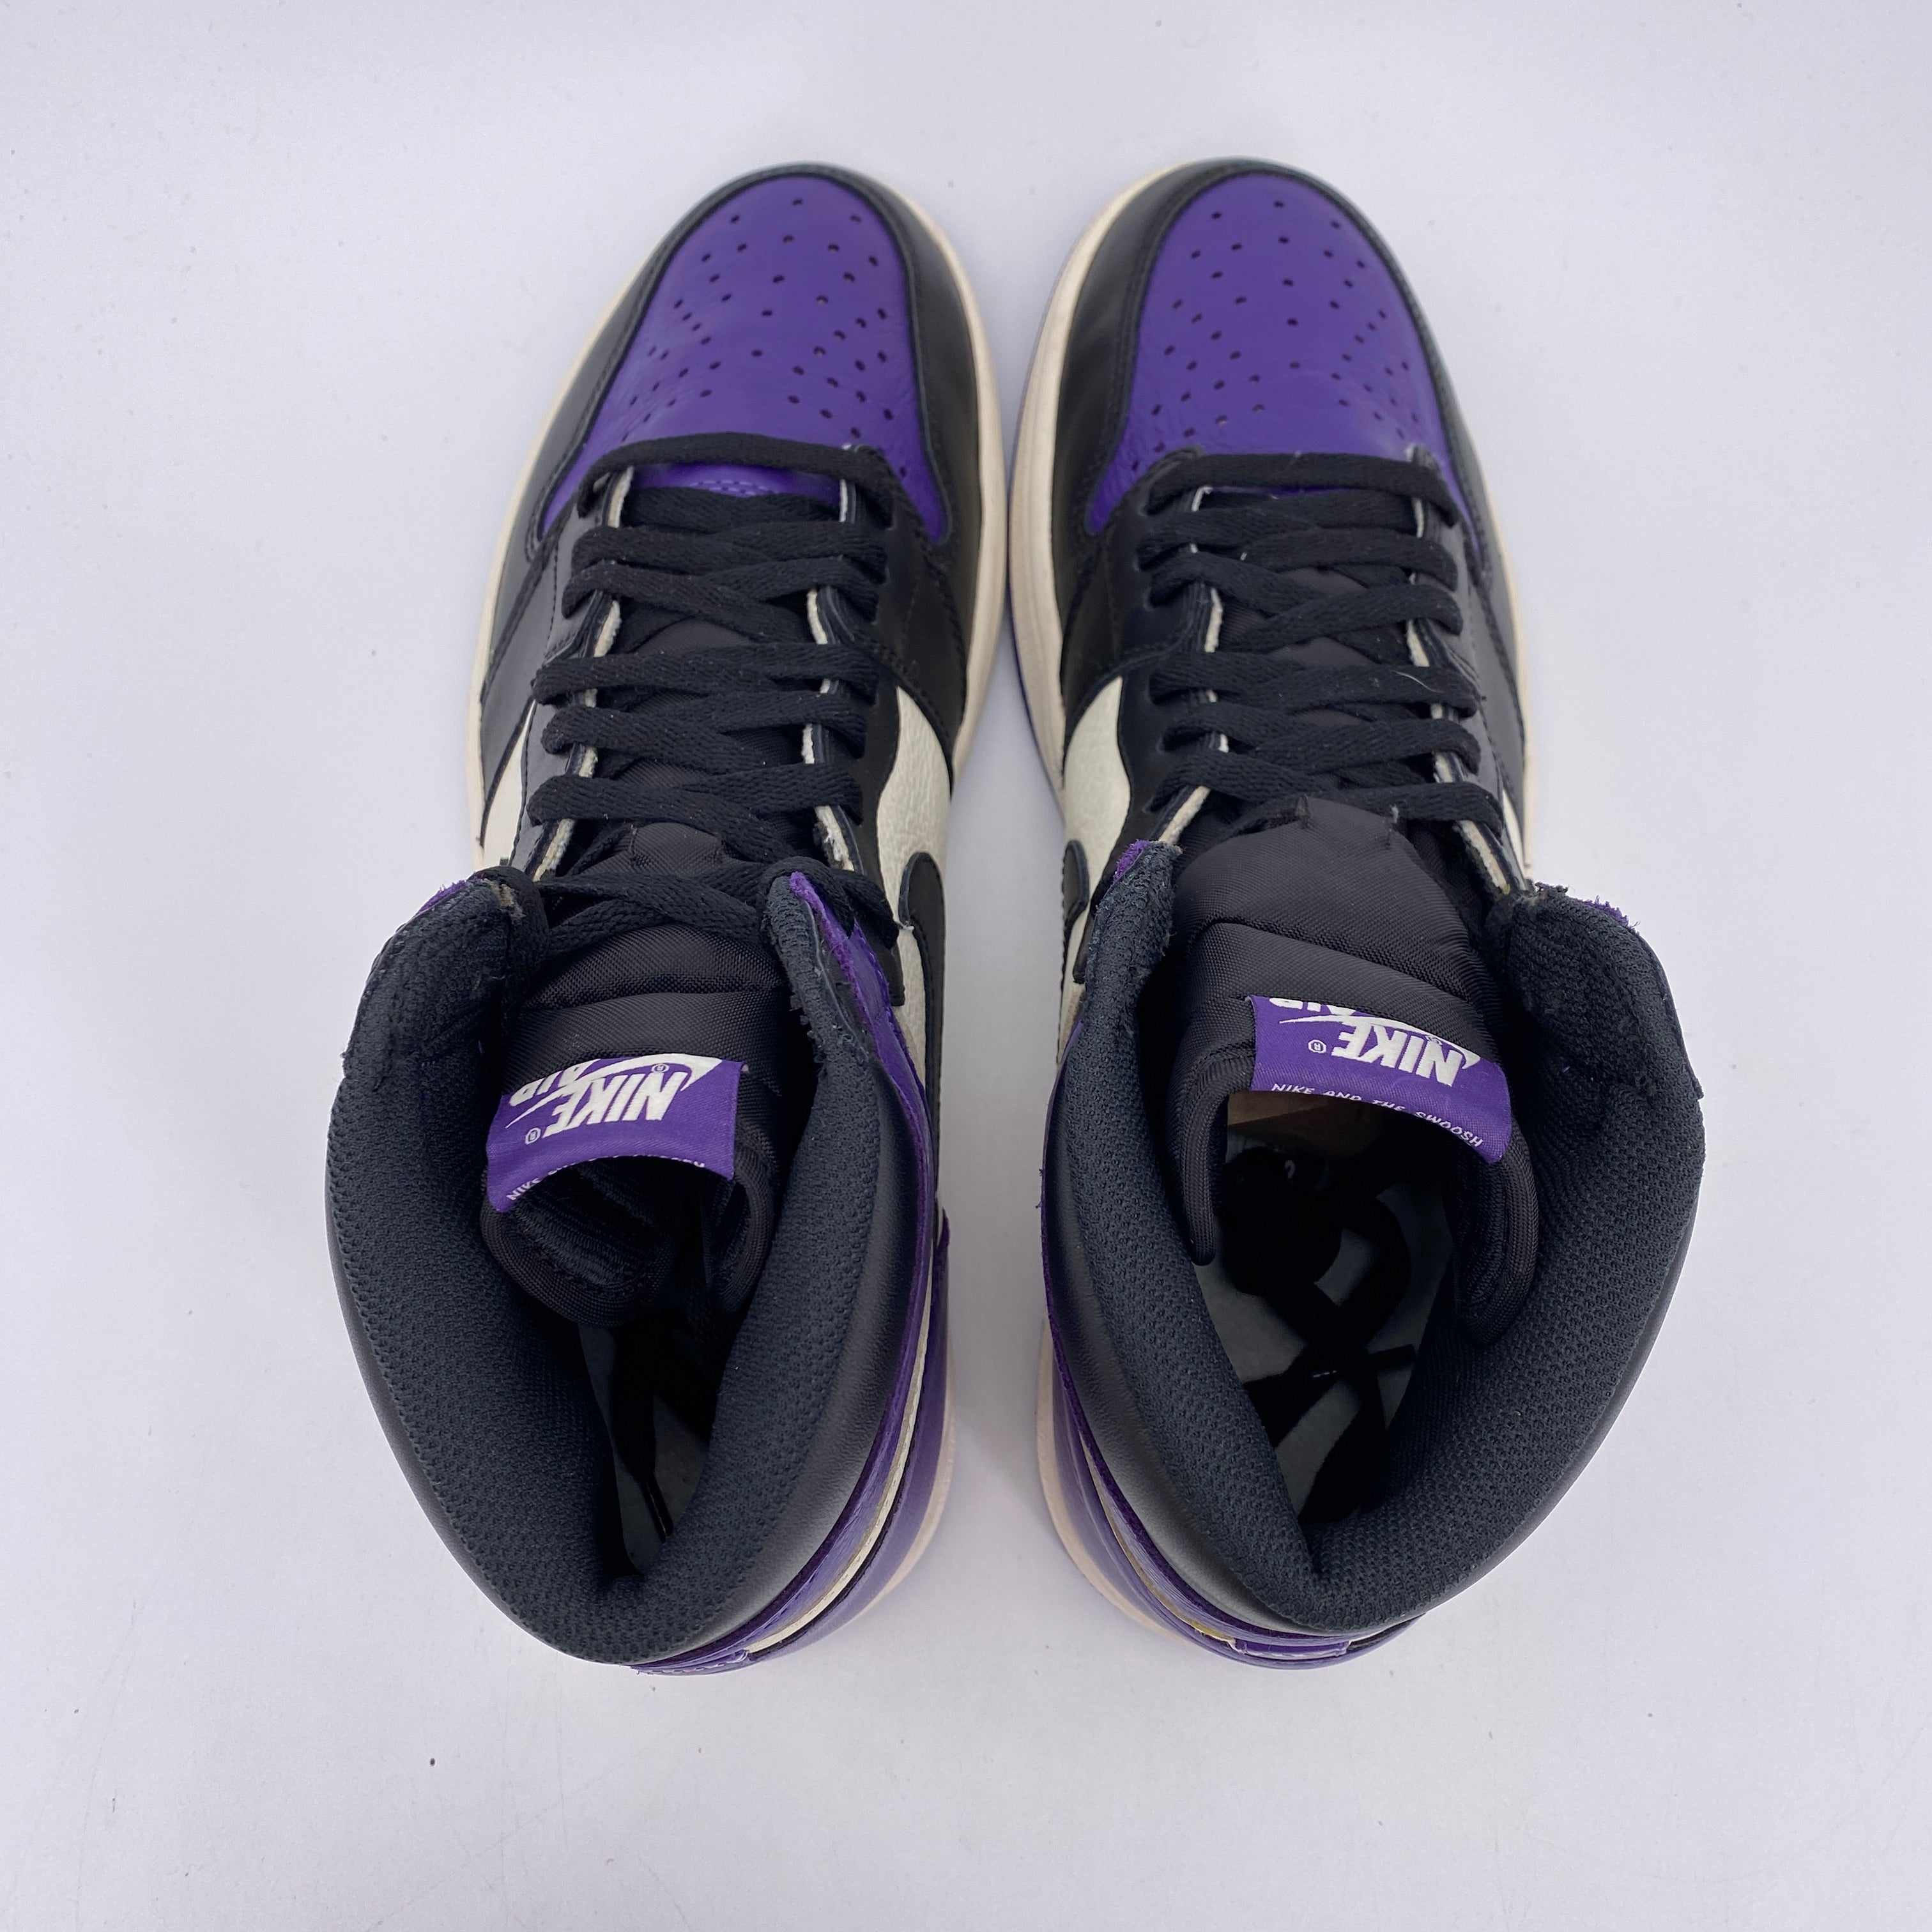 Air Jordan 1 Retro High OG "Court Purple" 2018 Used Size 12